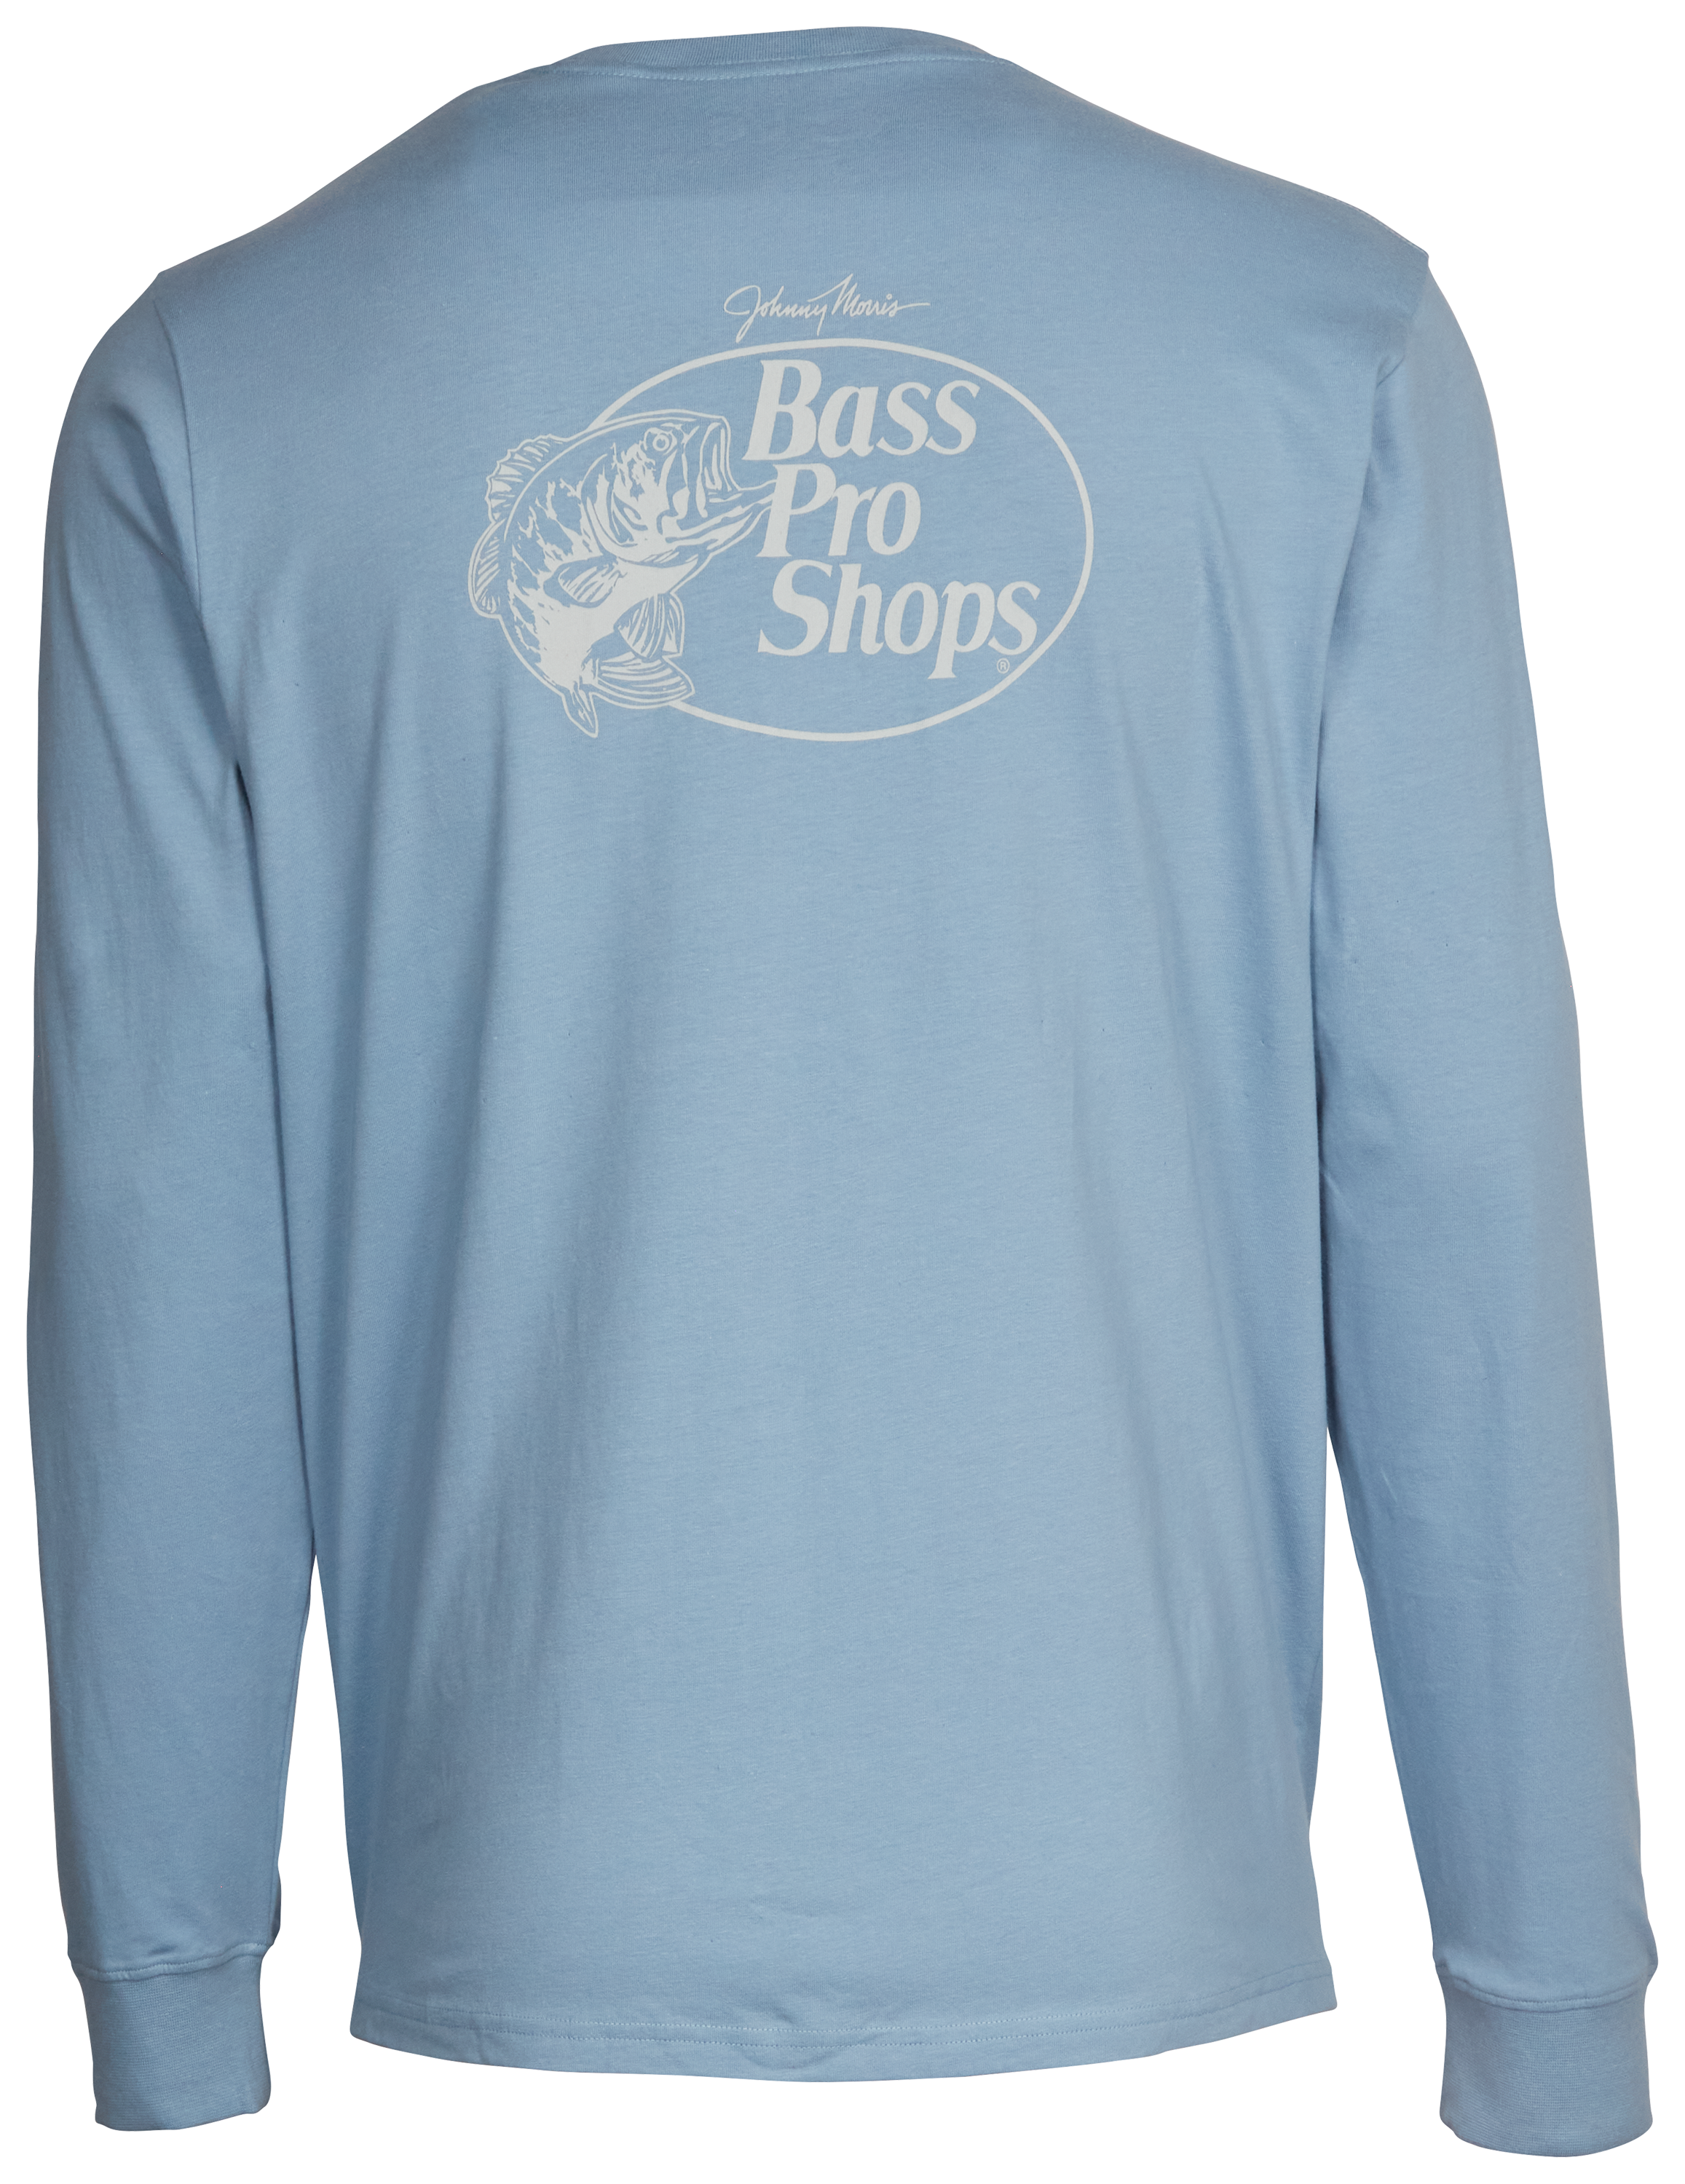 Bass Pro Shops Original Logo Long-Sleeve Hoodie for Men